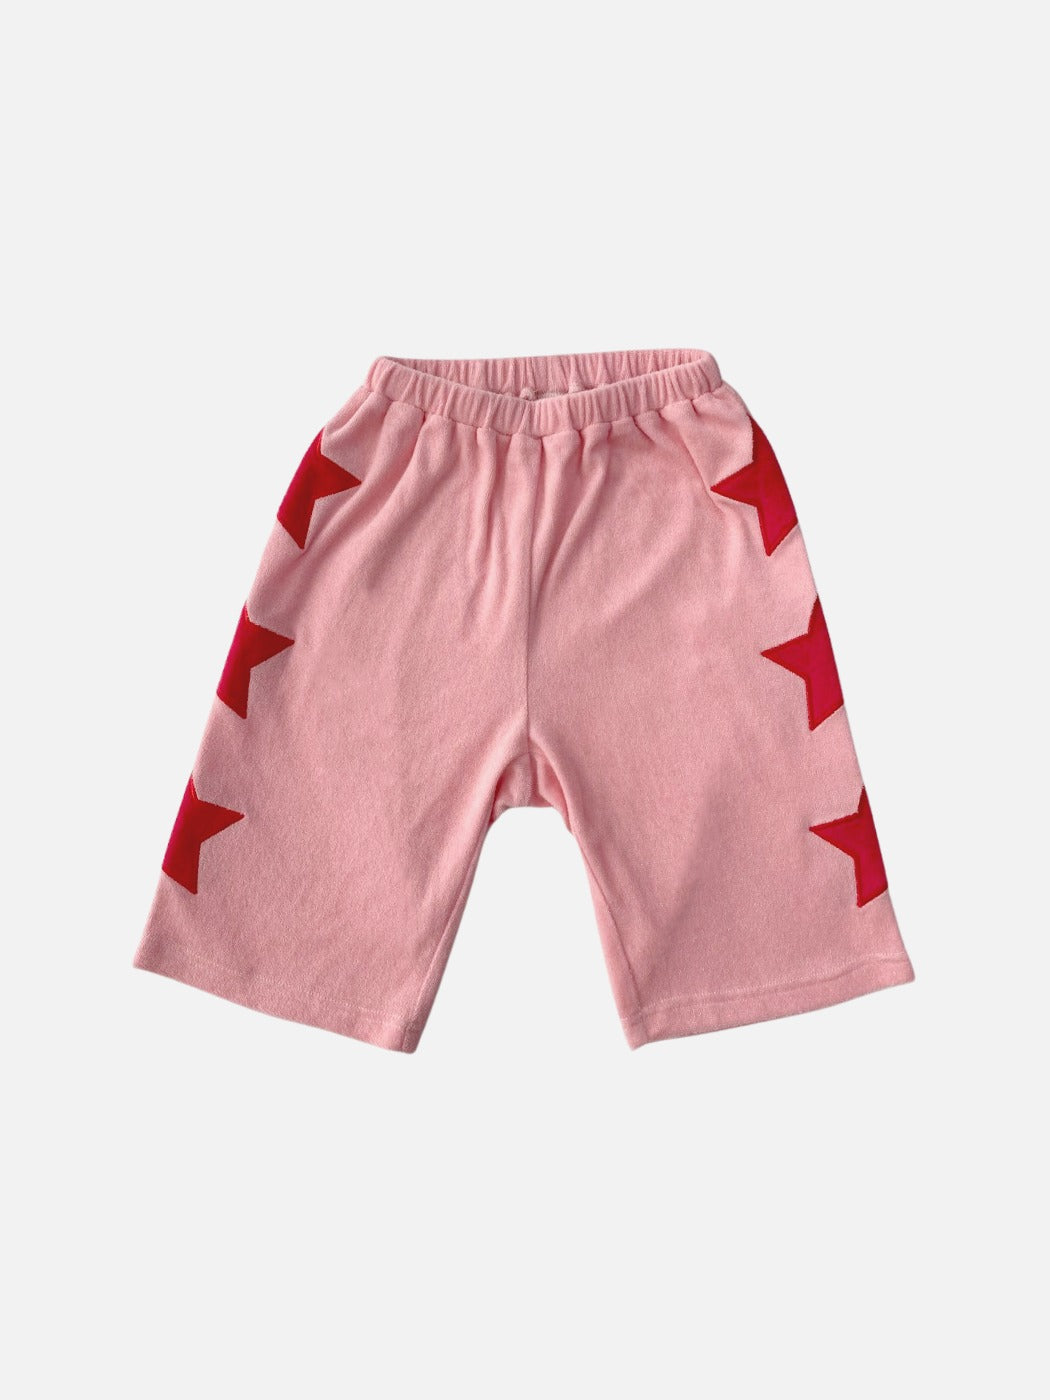 Star Pants - Pink + Red Preorder